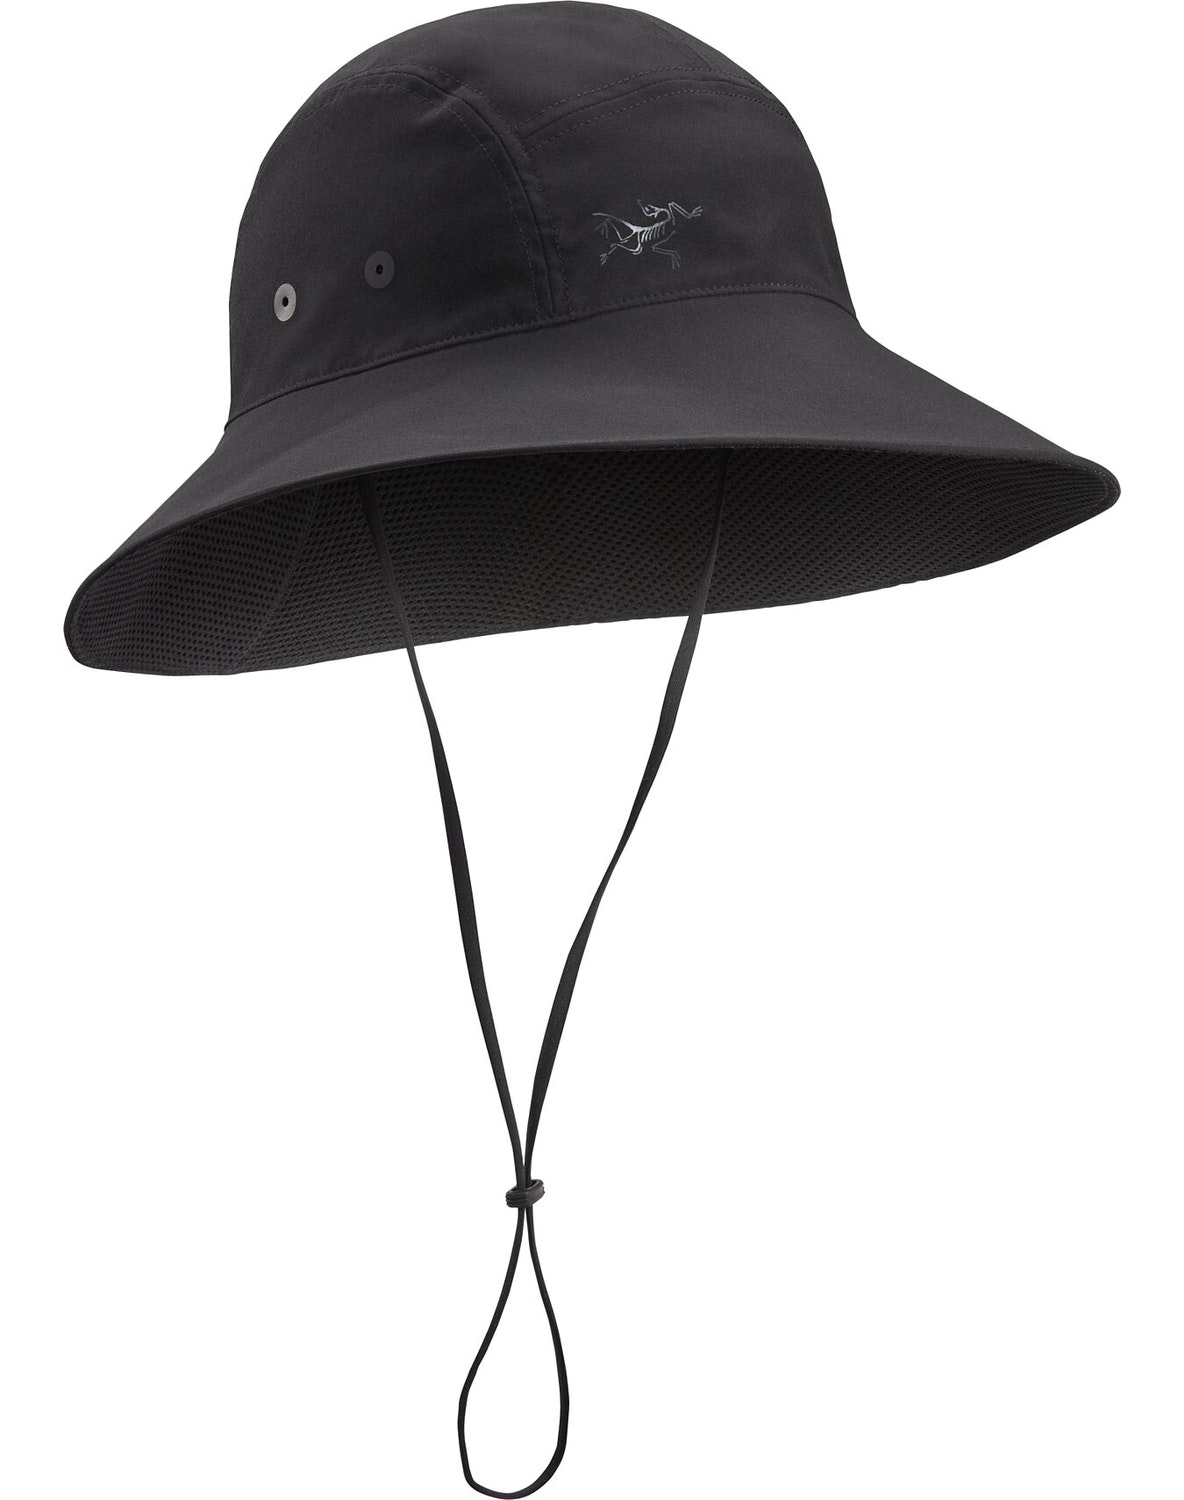 Hats Arc'teryx Sinsola Donna Nere - IT-147136